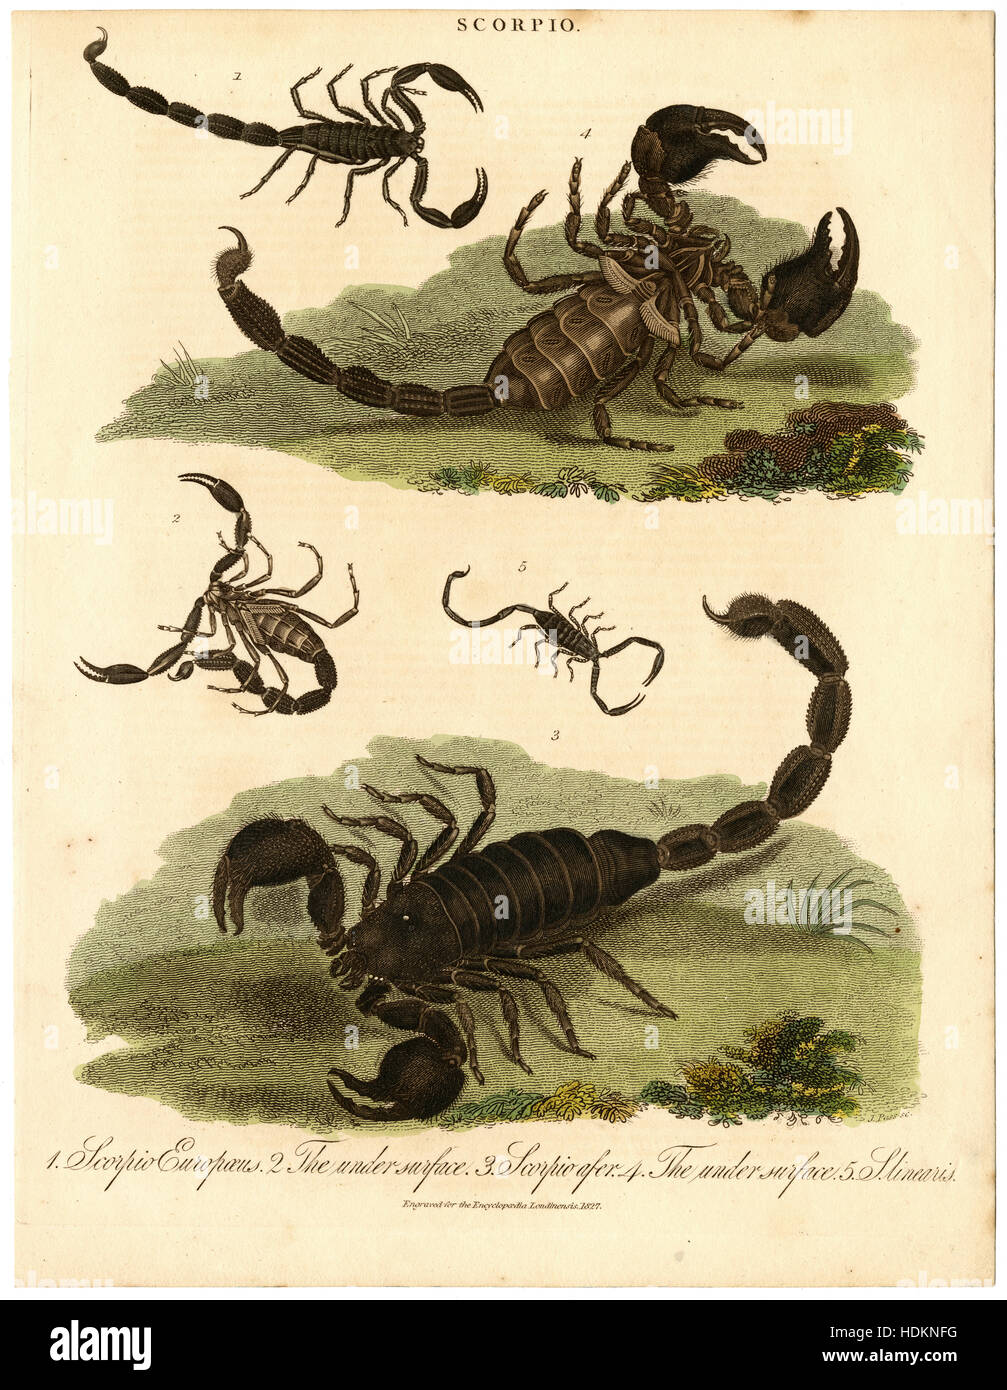 Antique 1827 engraving from the London Encyclopedia showing genus Scorpio — Scorpio Europaeus (European Scorpion), The Under Surface, Scorpio Afer (Black Scorpion), The Under Surface, Scorpio linearis (Linear Scorpion). SOURCE: ORIGINAL ENGRAVING. Stock Photo